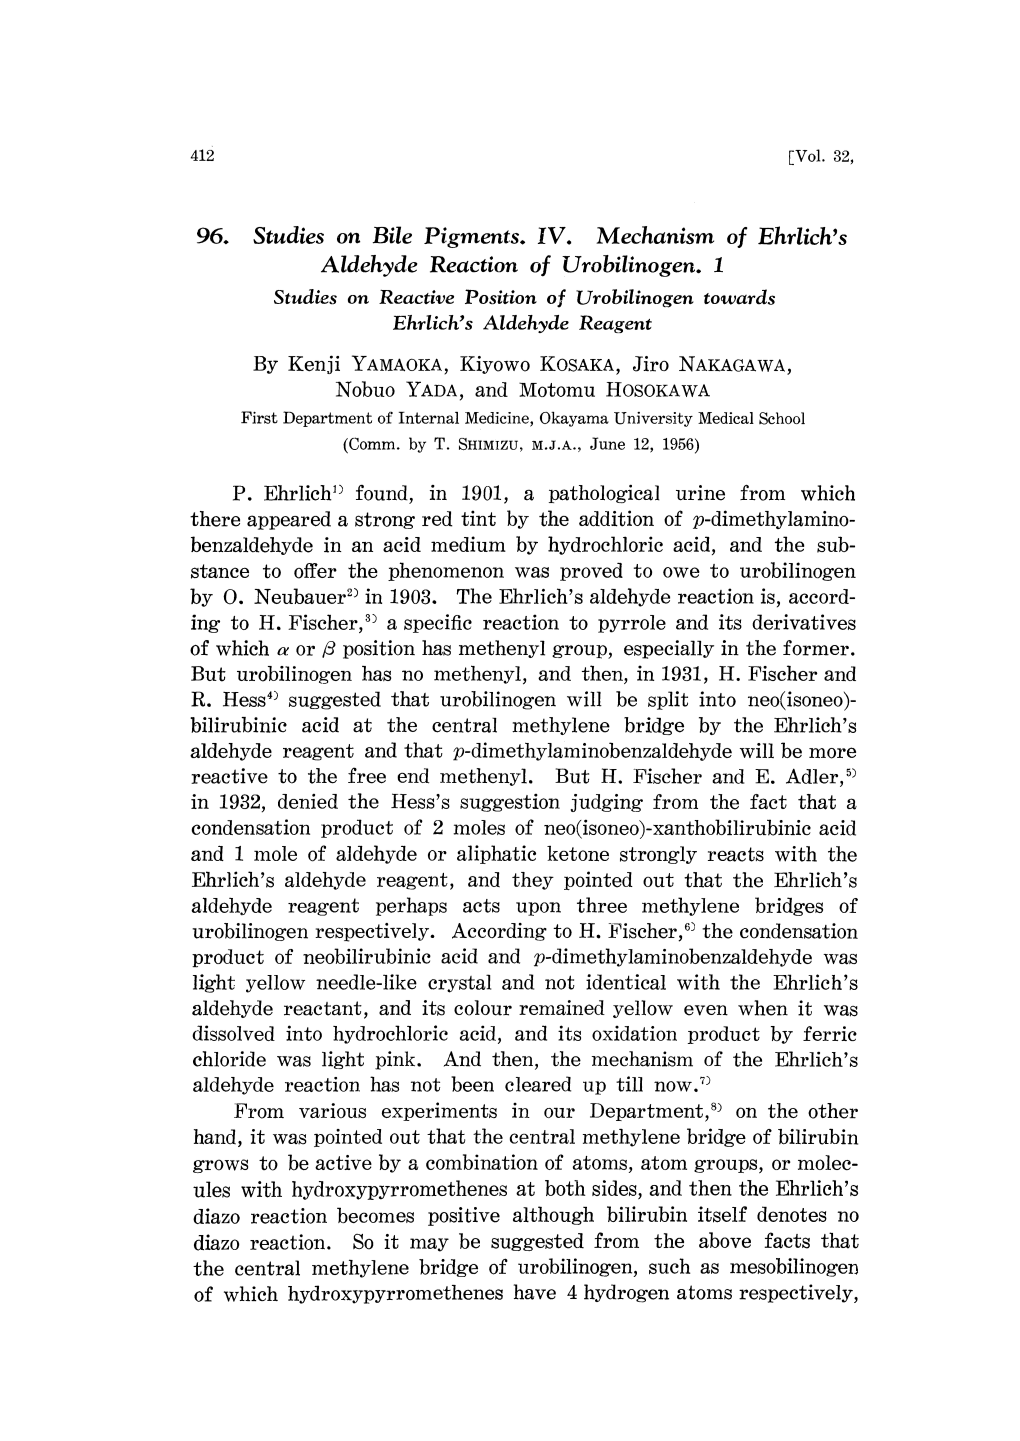 96. Studies on Bile Pigments. IV. Mechanism O F Ehrlich's Aldehyde